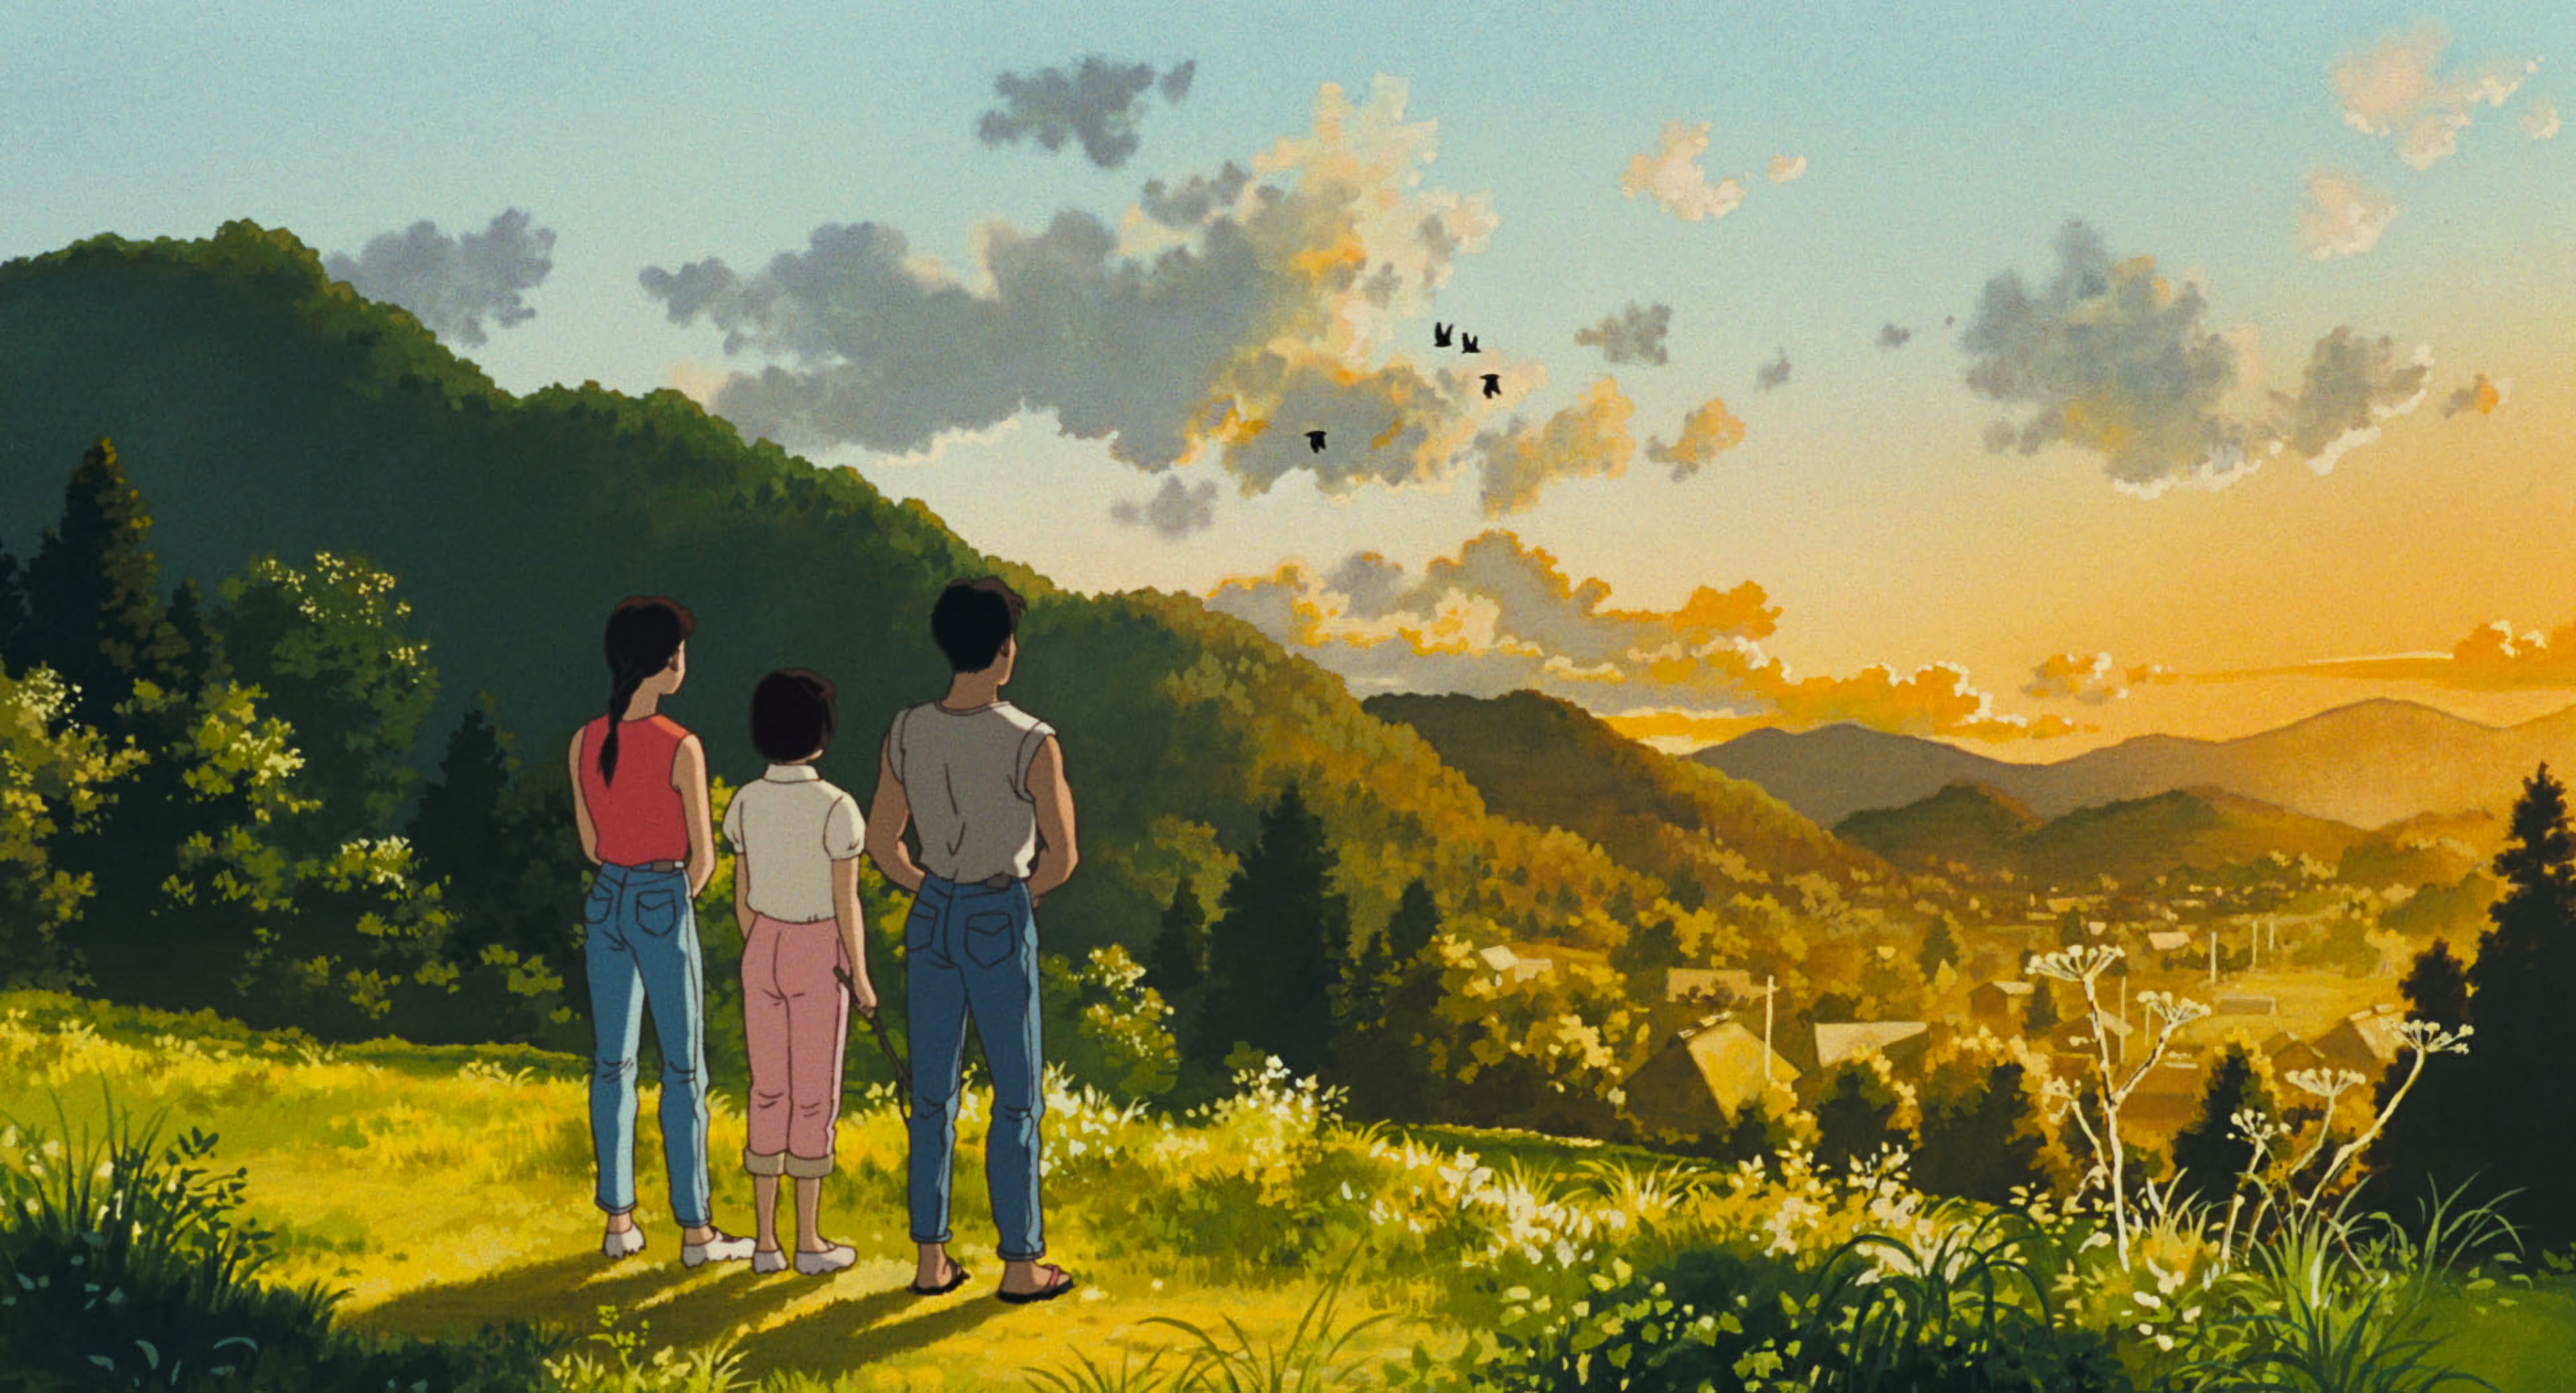 Anime 3840x2076 Studio Ghibli Omoide Poro Poro upscaled film stills anime girls anime boys Anime screenshot sunset sunset glow nature